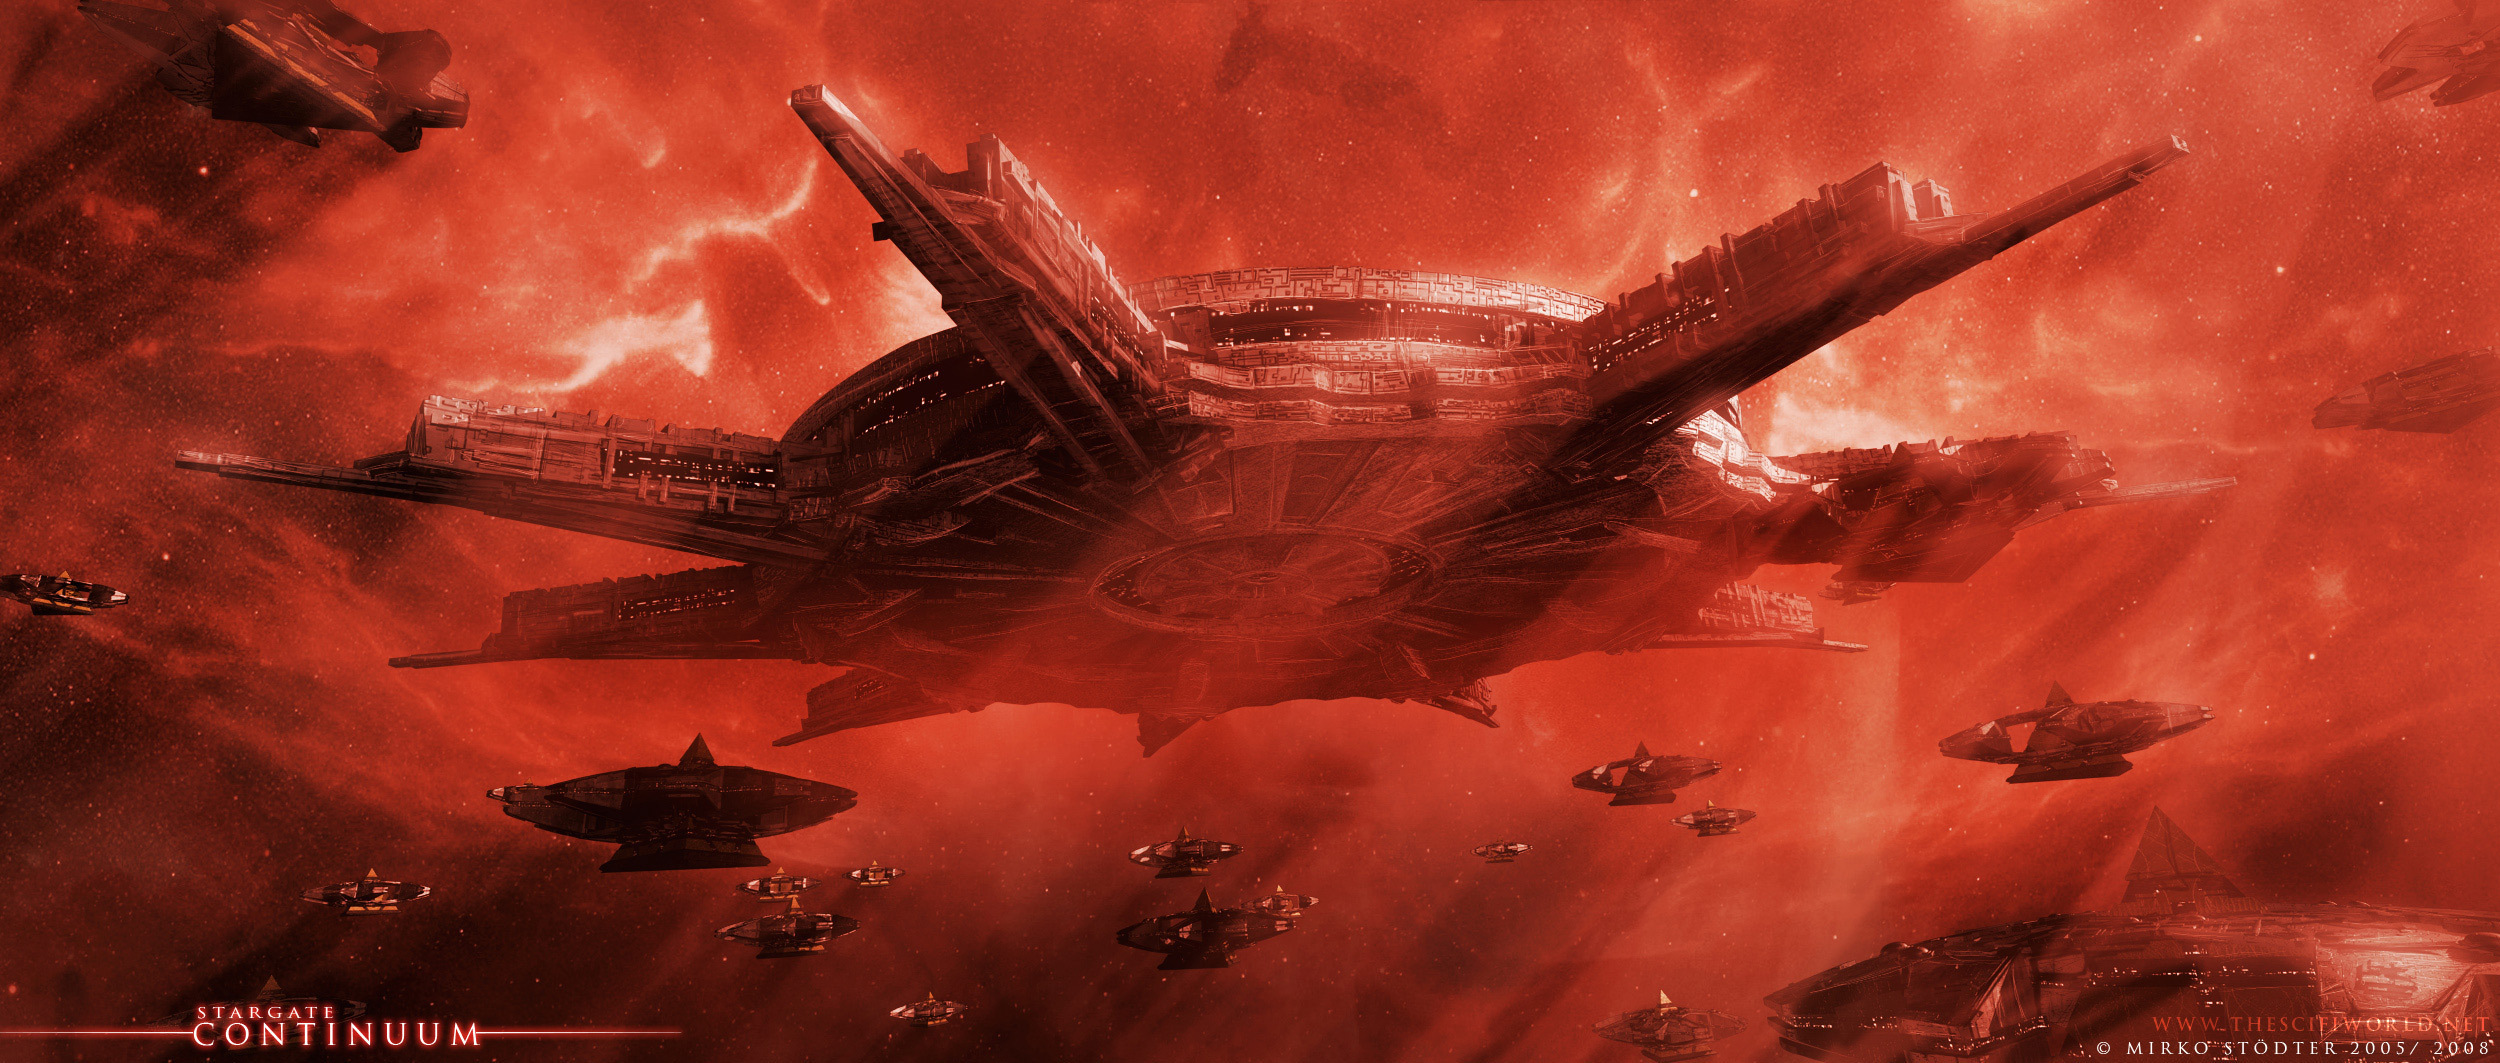 Movie Stargate: Continuum HD Wallpaper | Background Image